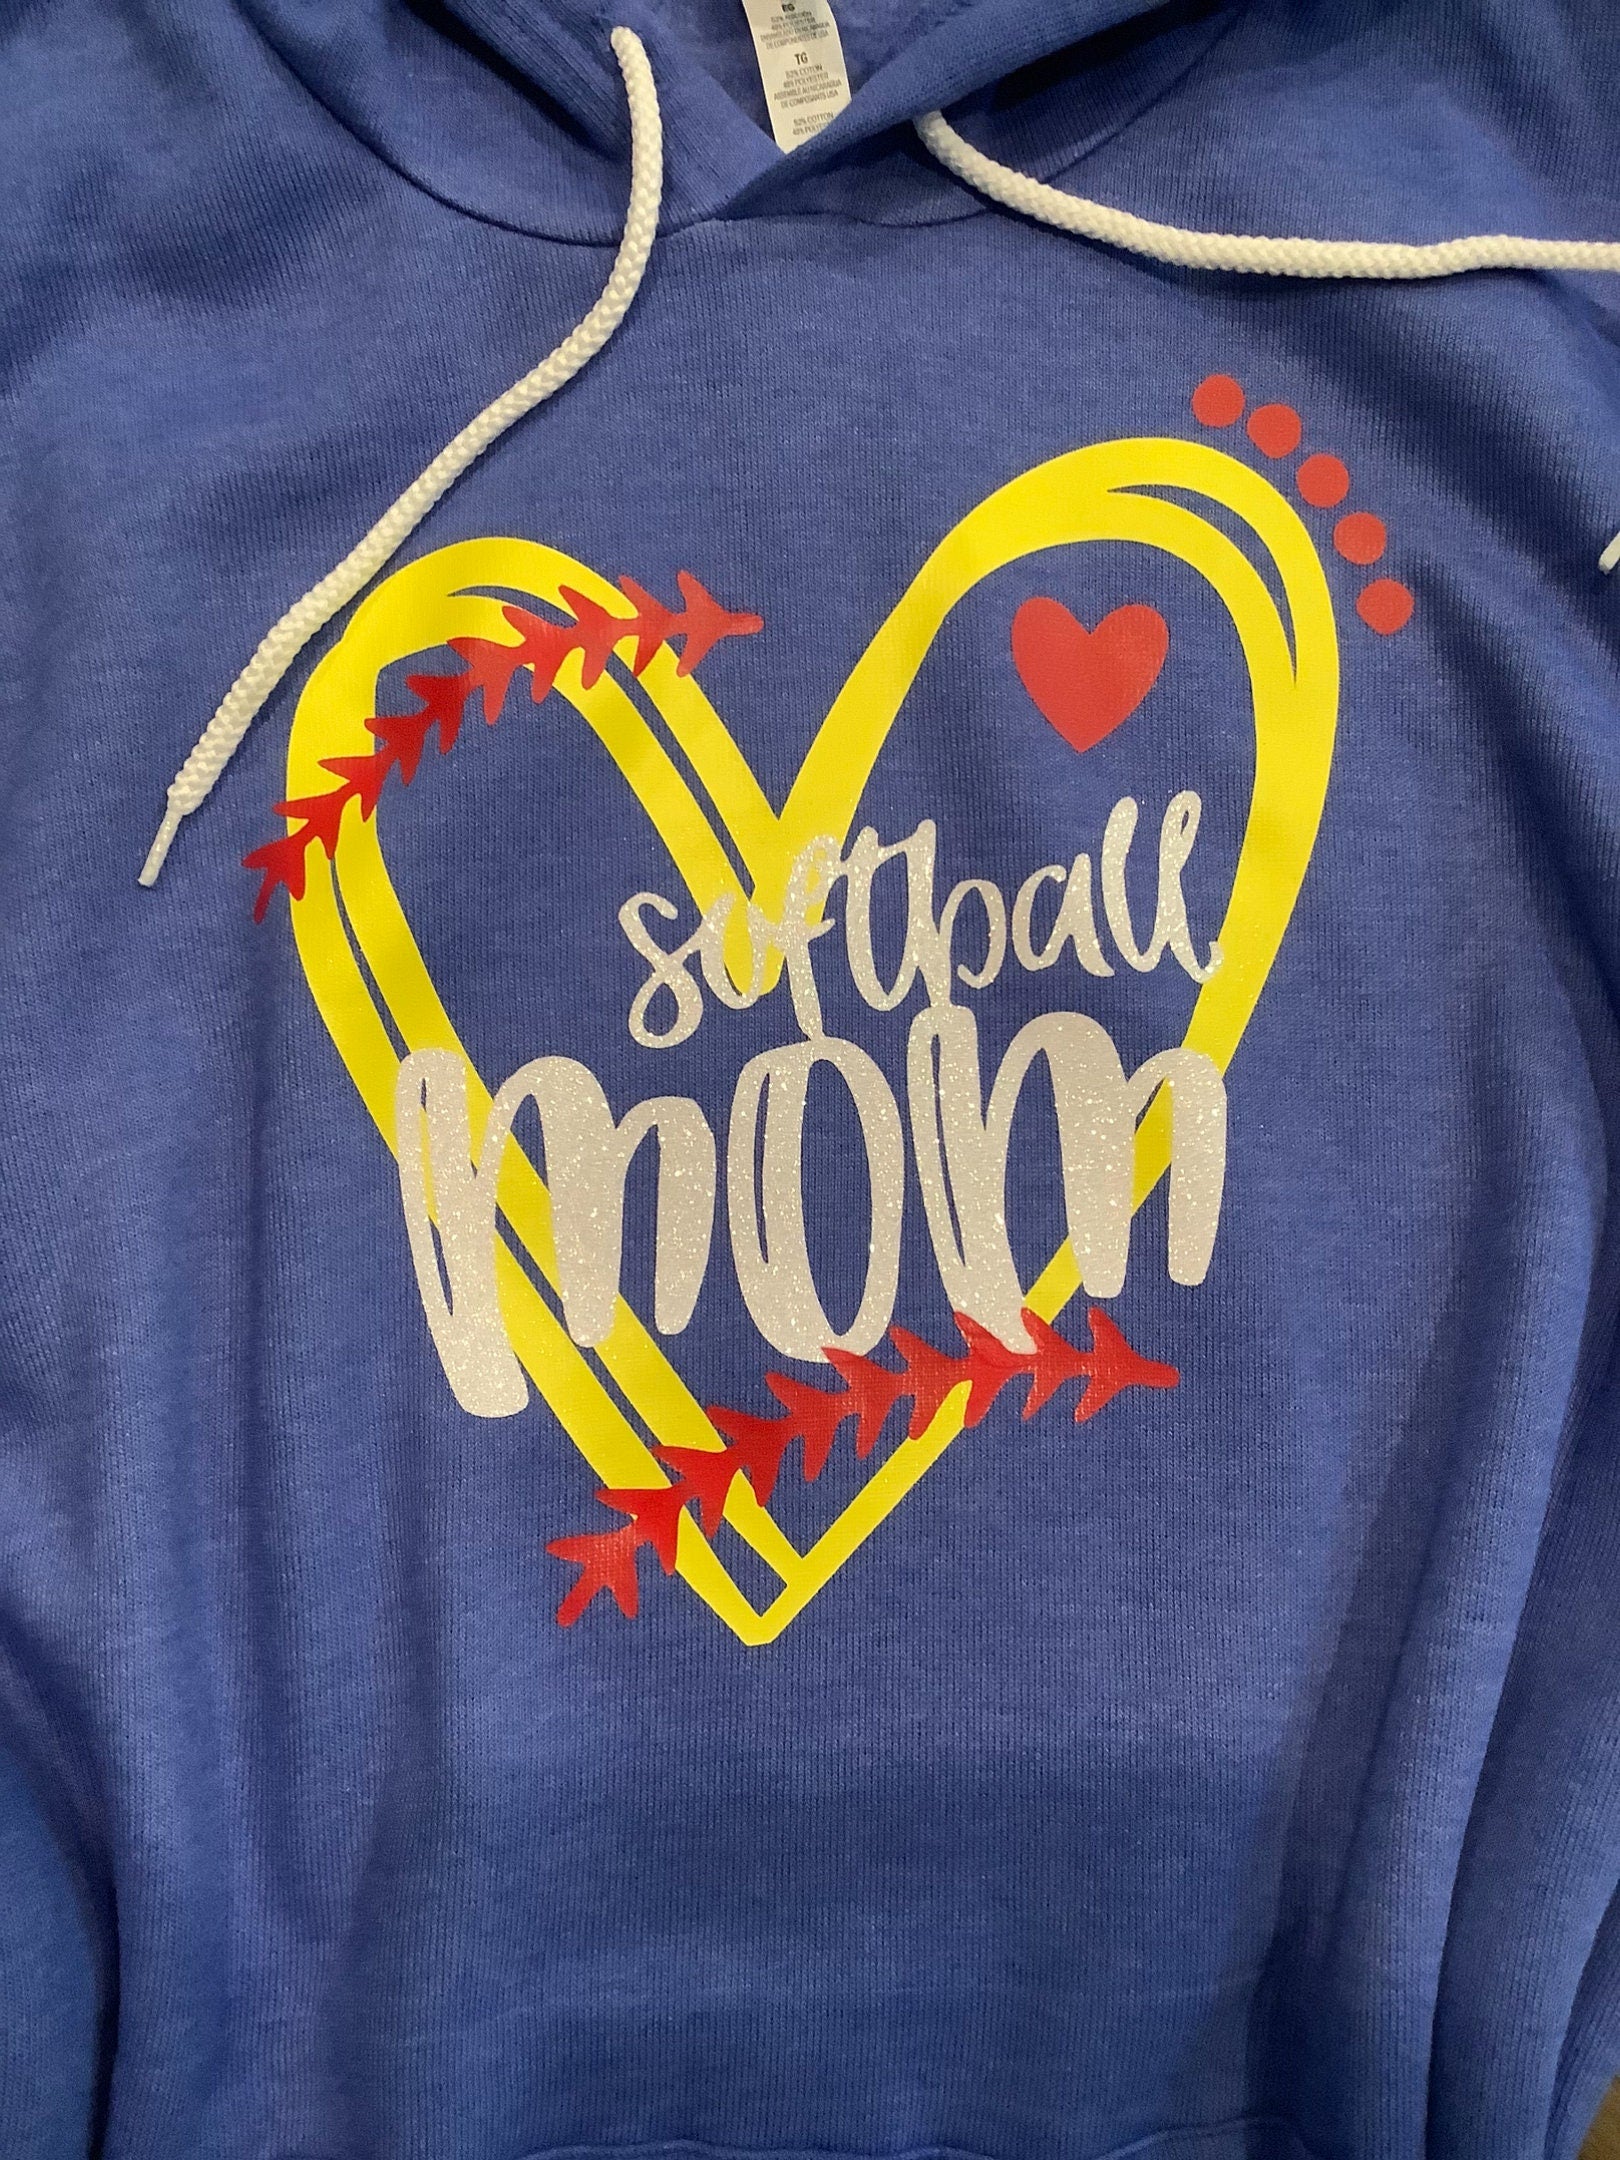 Softball Mom Heart Shirt